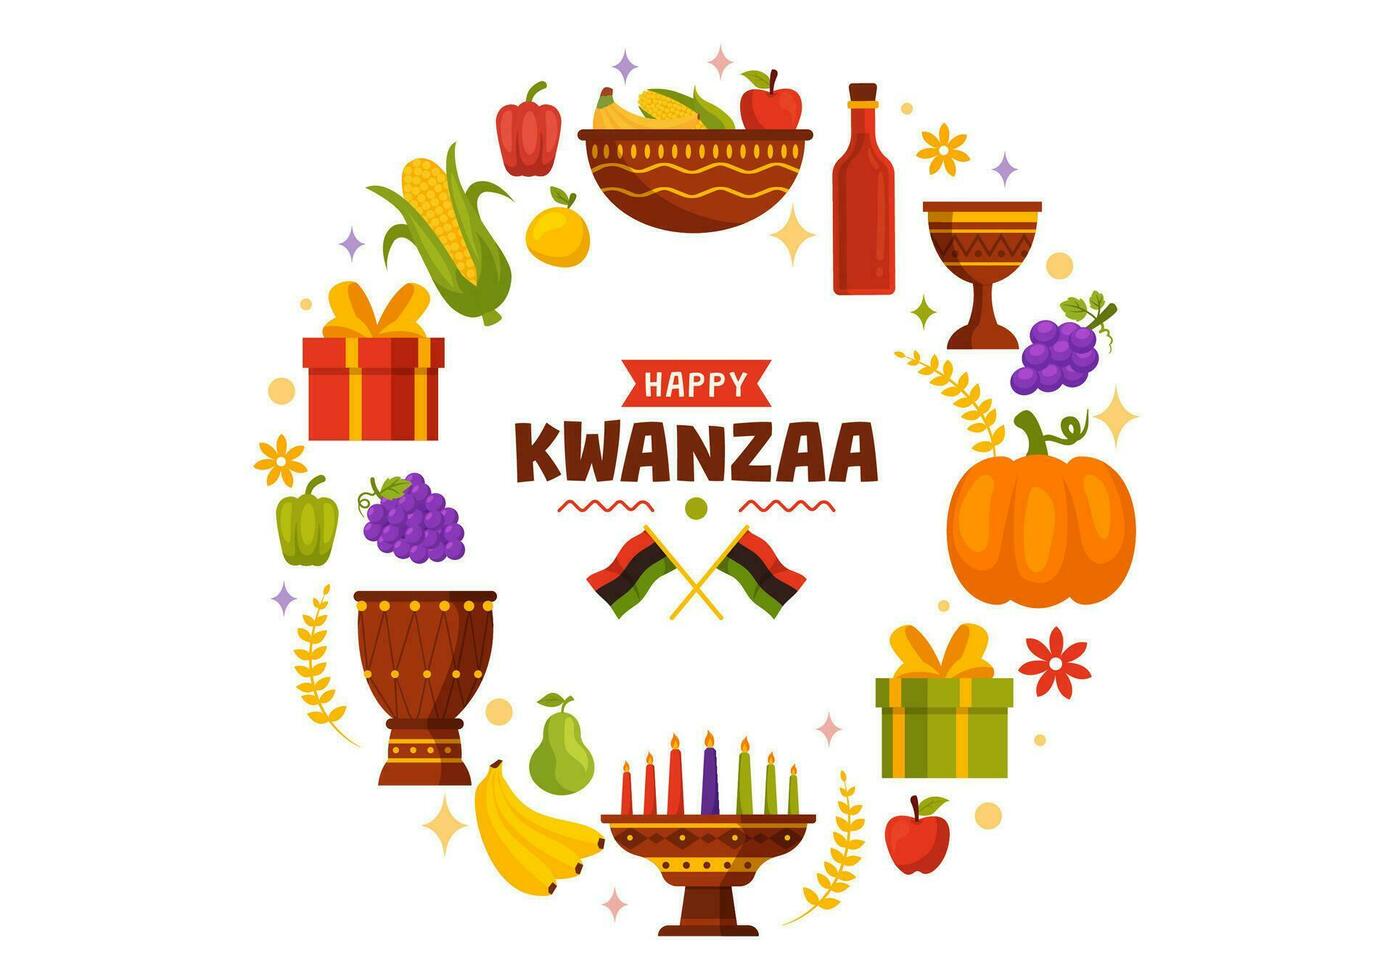 contento kwanzaa vector ilustración con mazao, zawadi, mkeka, kinara, regalos, taza, velas en tradicional fiesta africano símbolo plano dibujos animados antecedentes